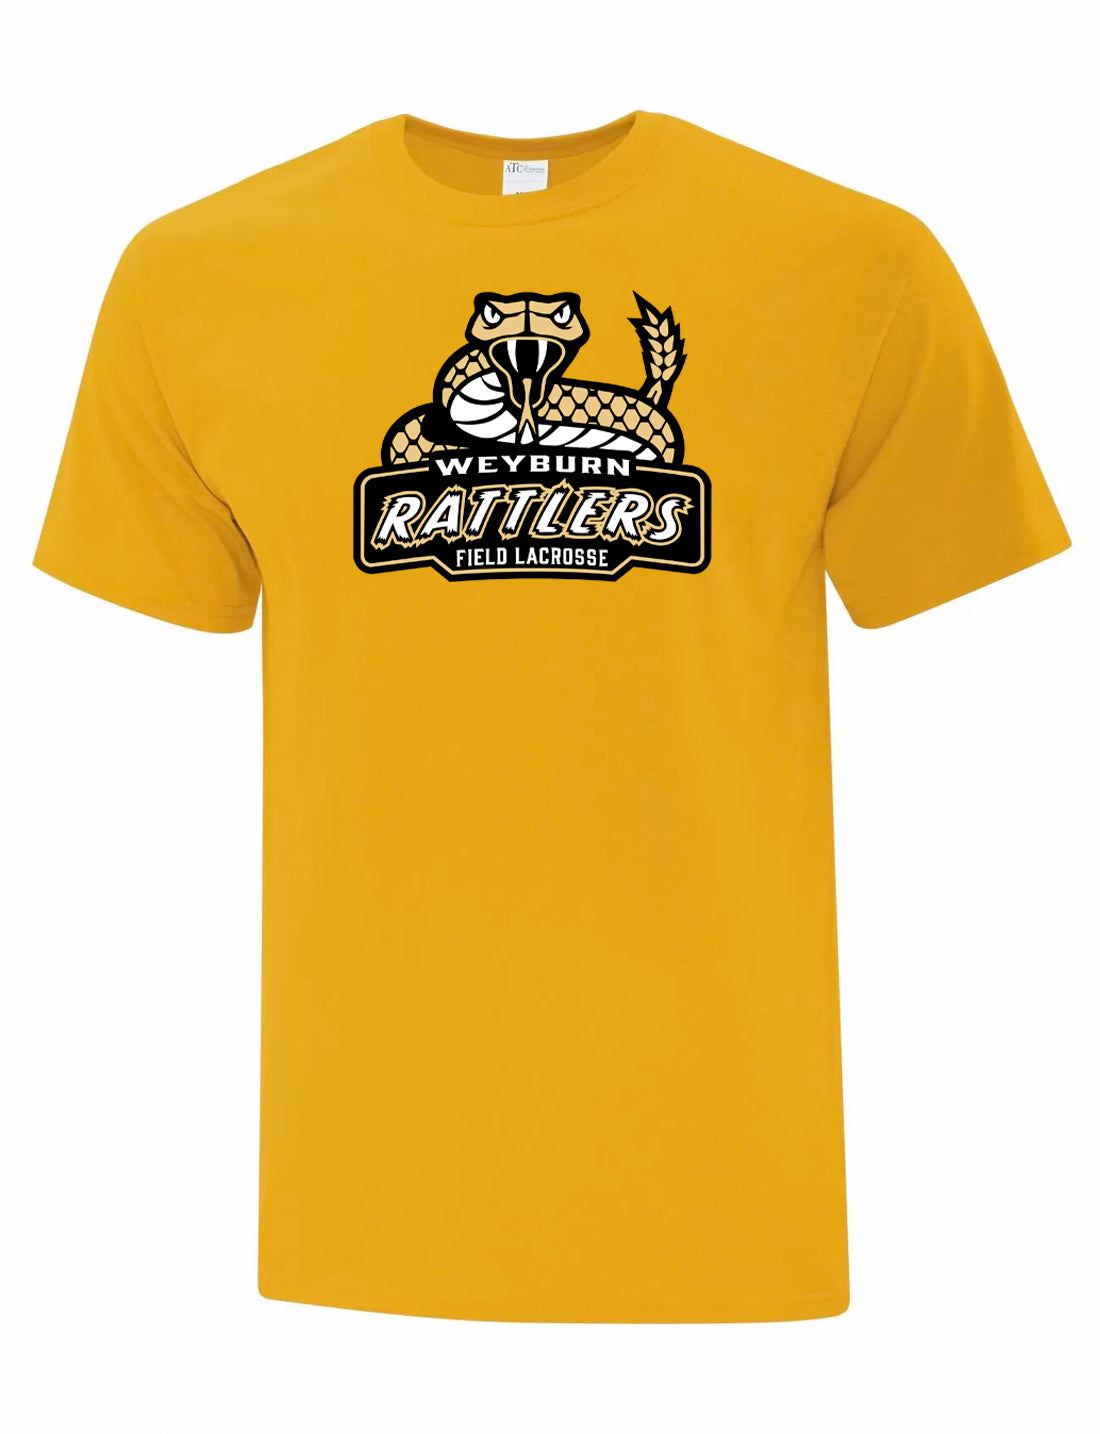 Weyburn Rattlers T-Shirt